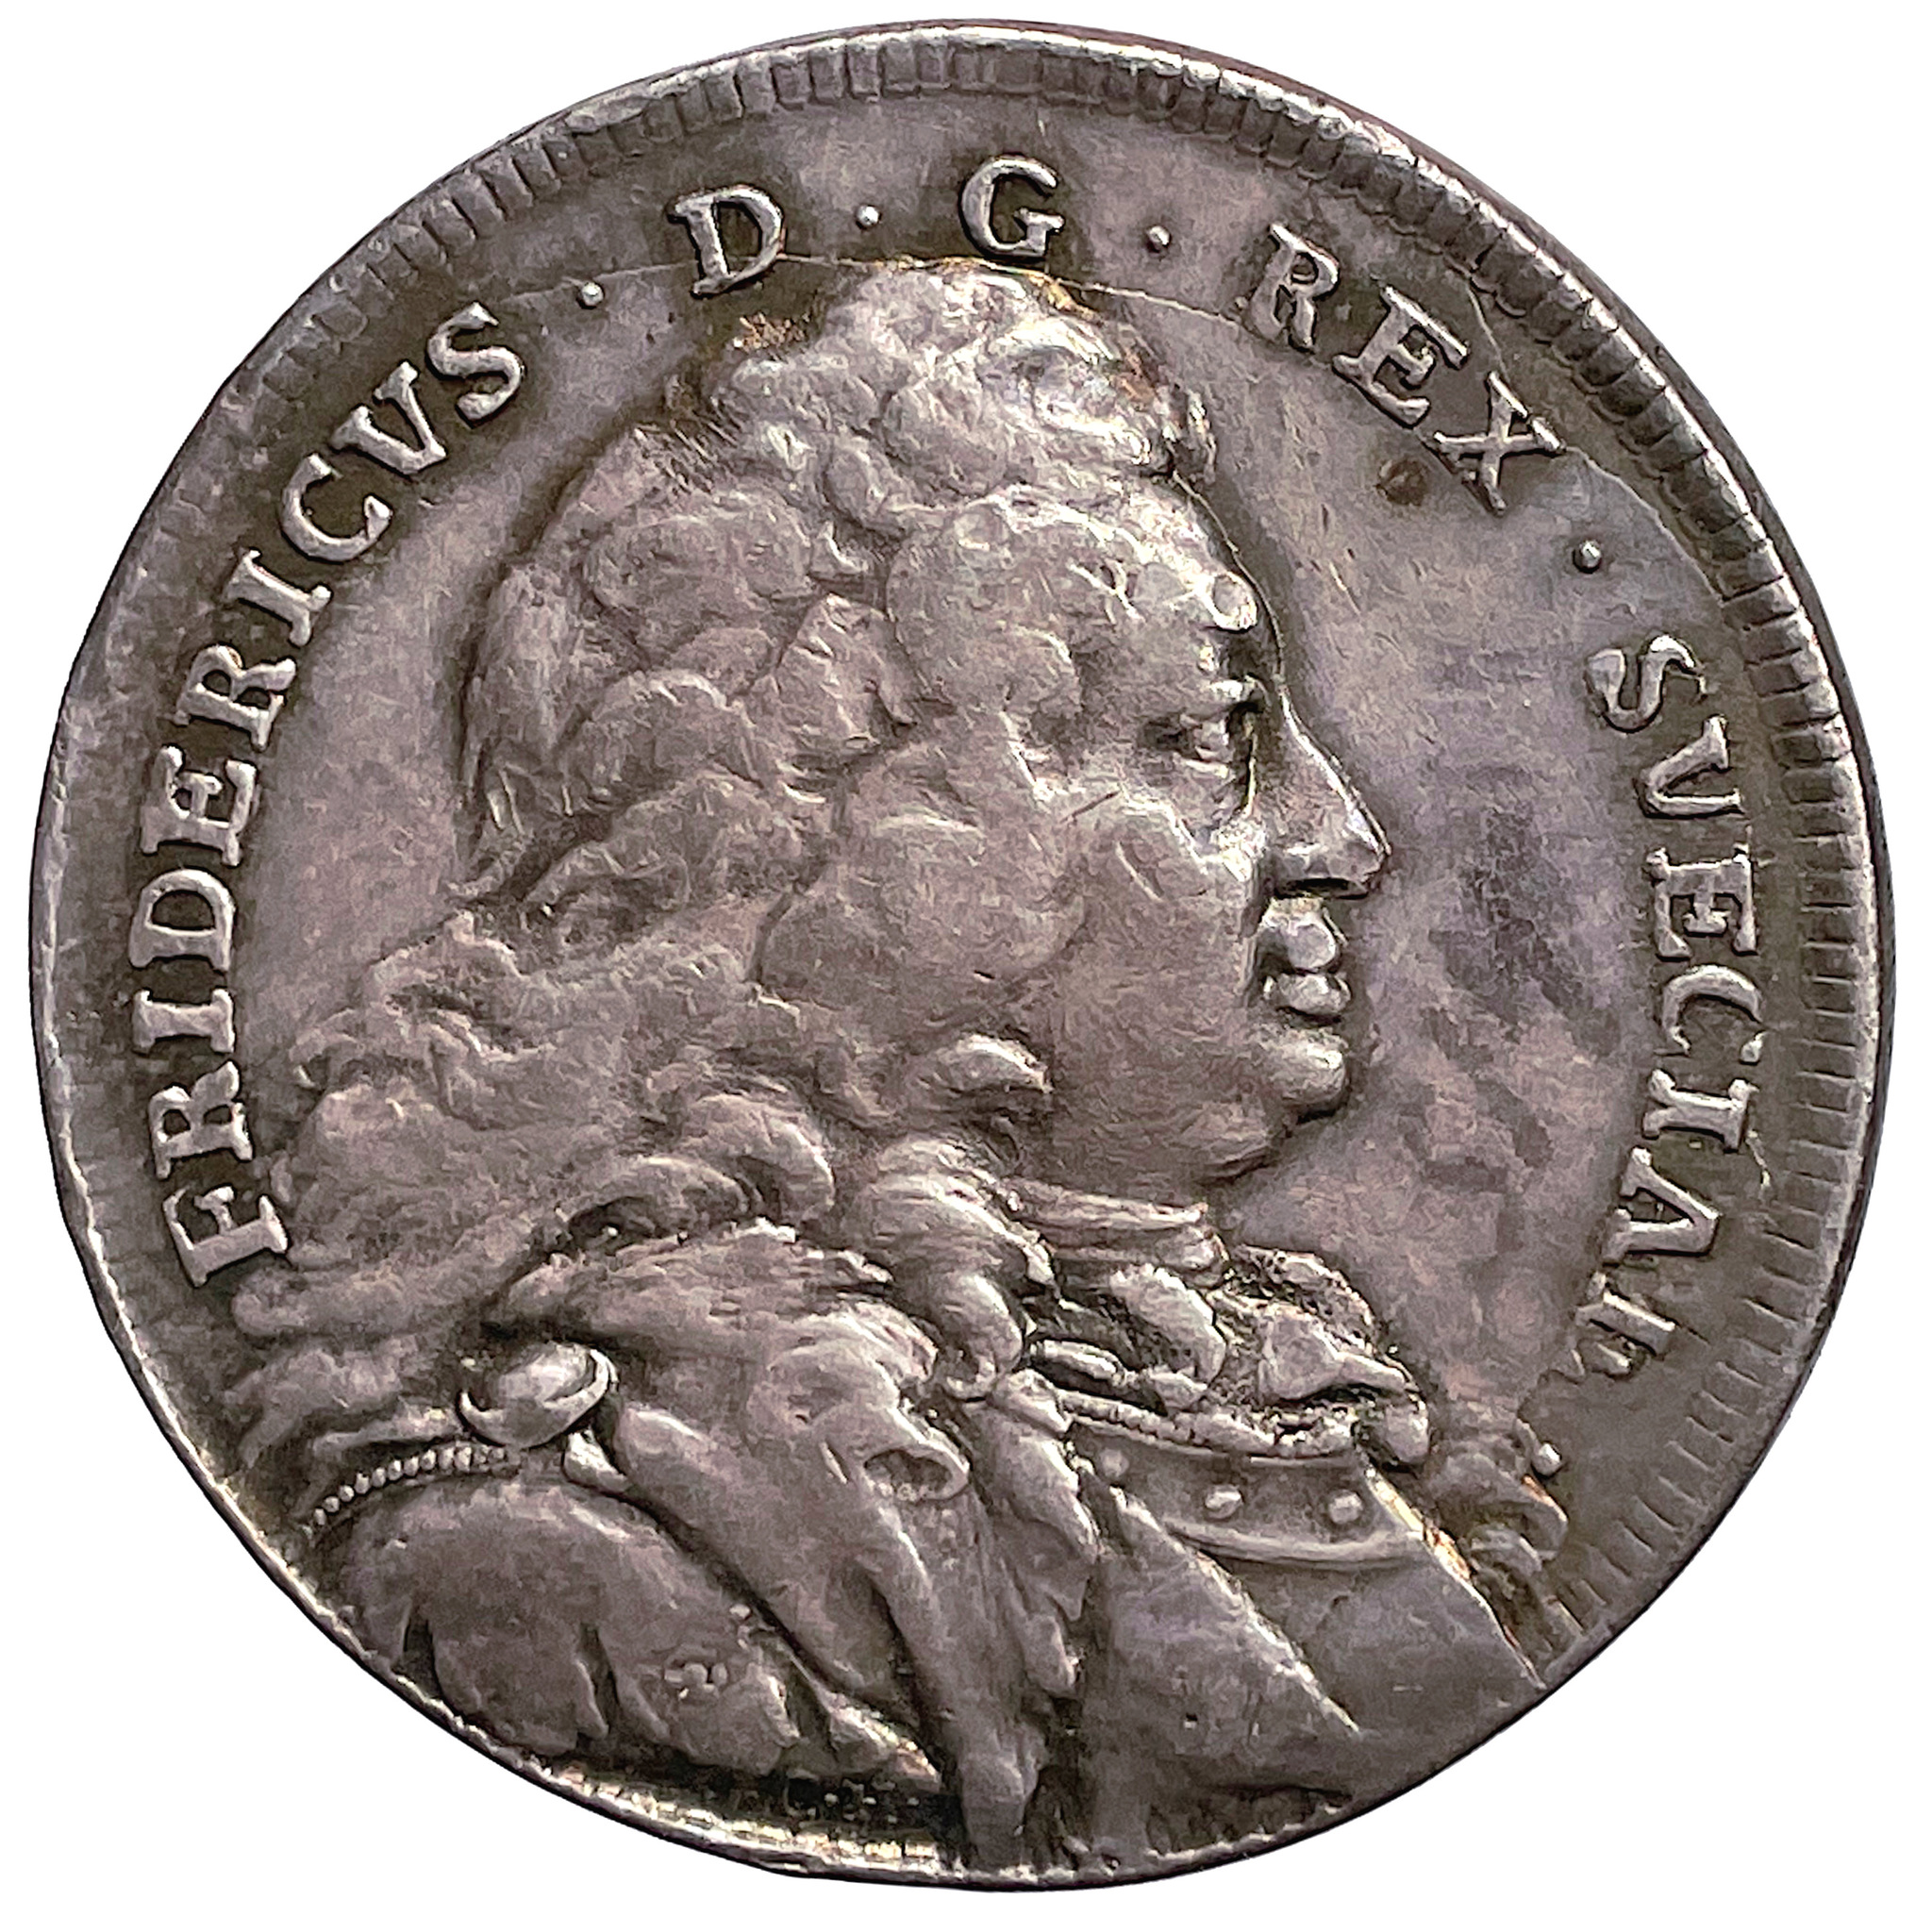 Hedlingers regentlängd - Dedikationsmedaljen av Johan Carl Hedlinger